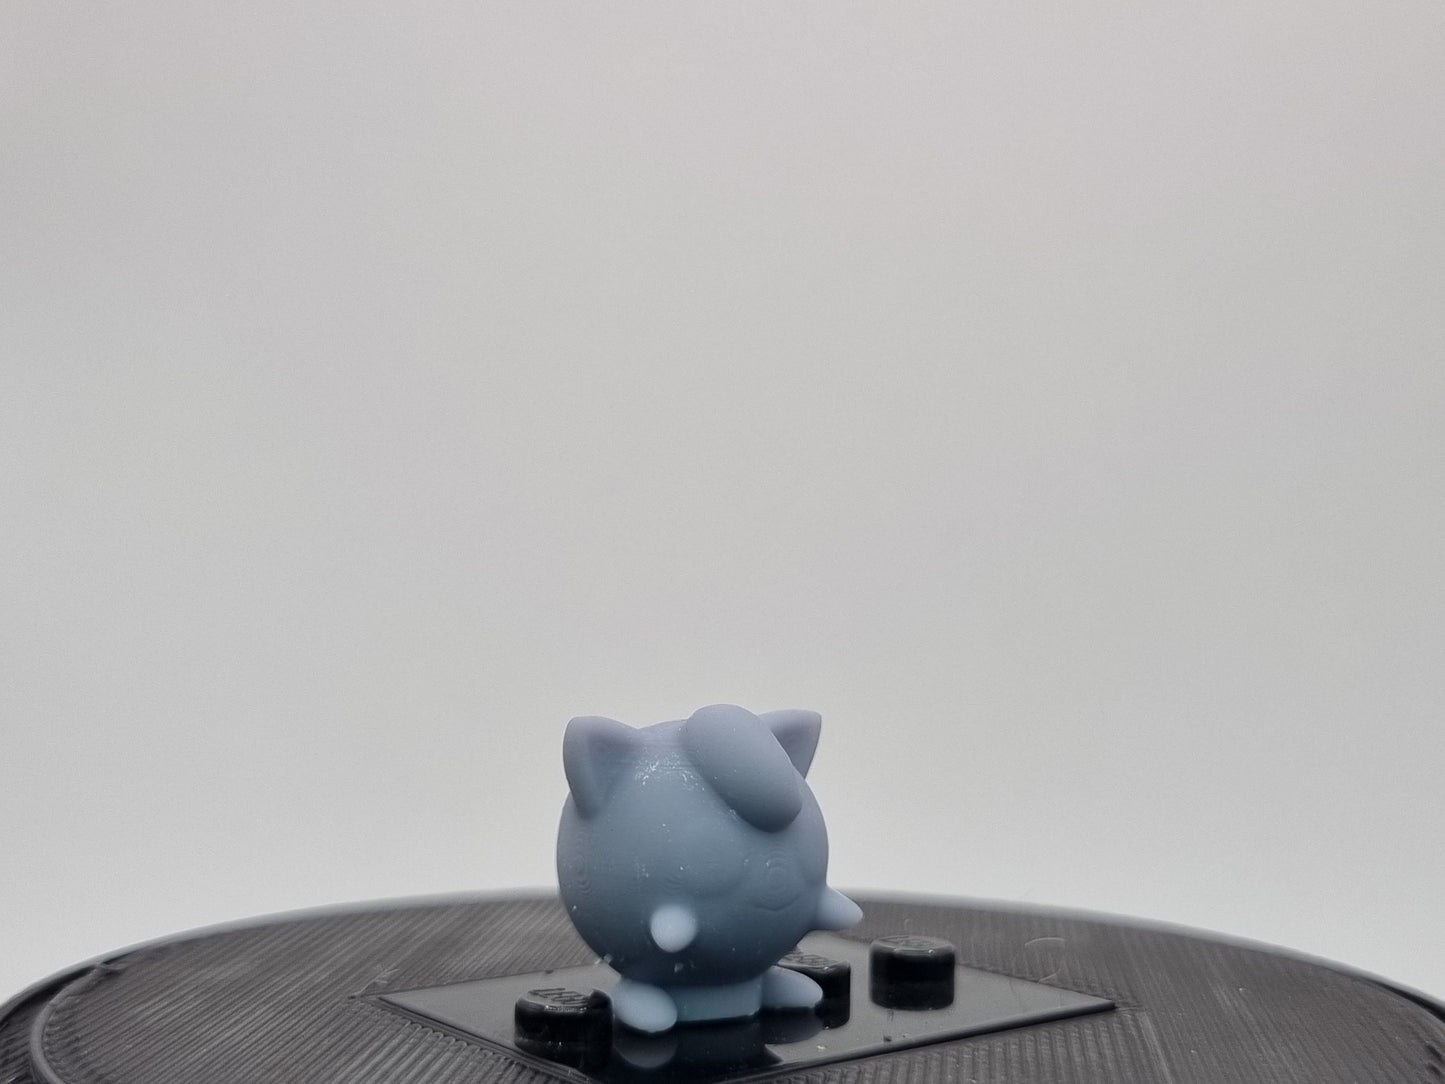 Building toy custom 3D printed fluffy animal!